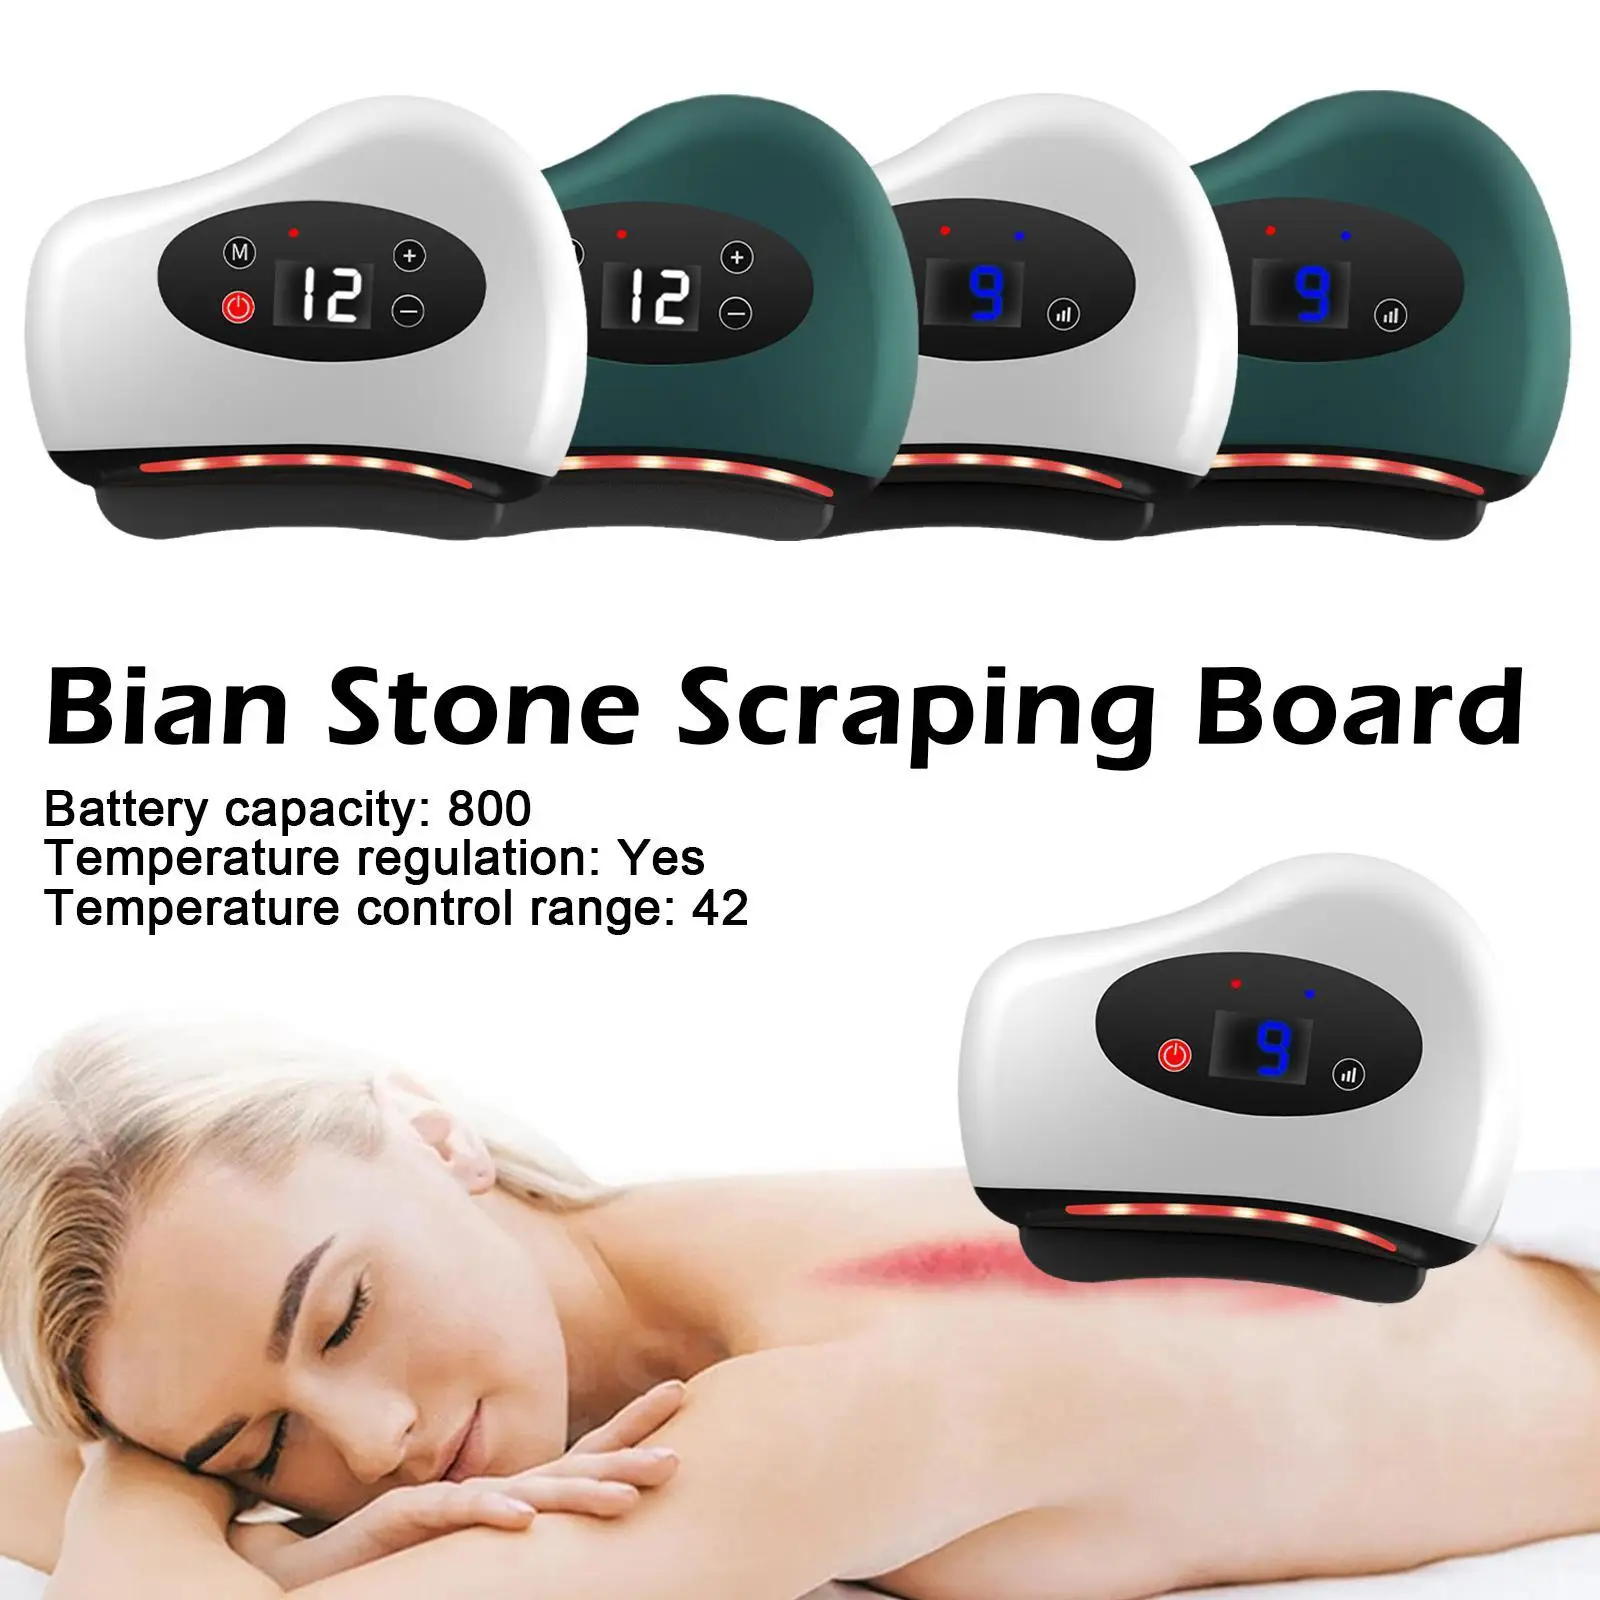 

Electric Scraping Board Stone Gua Sha Scraper Hot Compress Vibration Facial Lifting Relaxation Massage Device